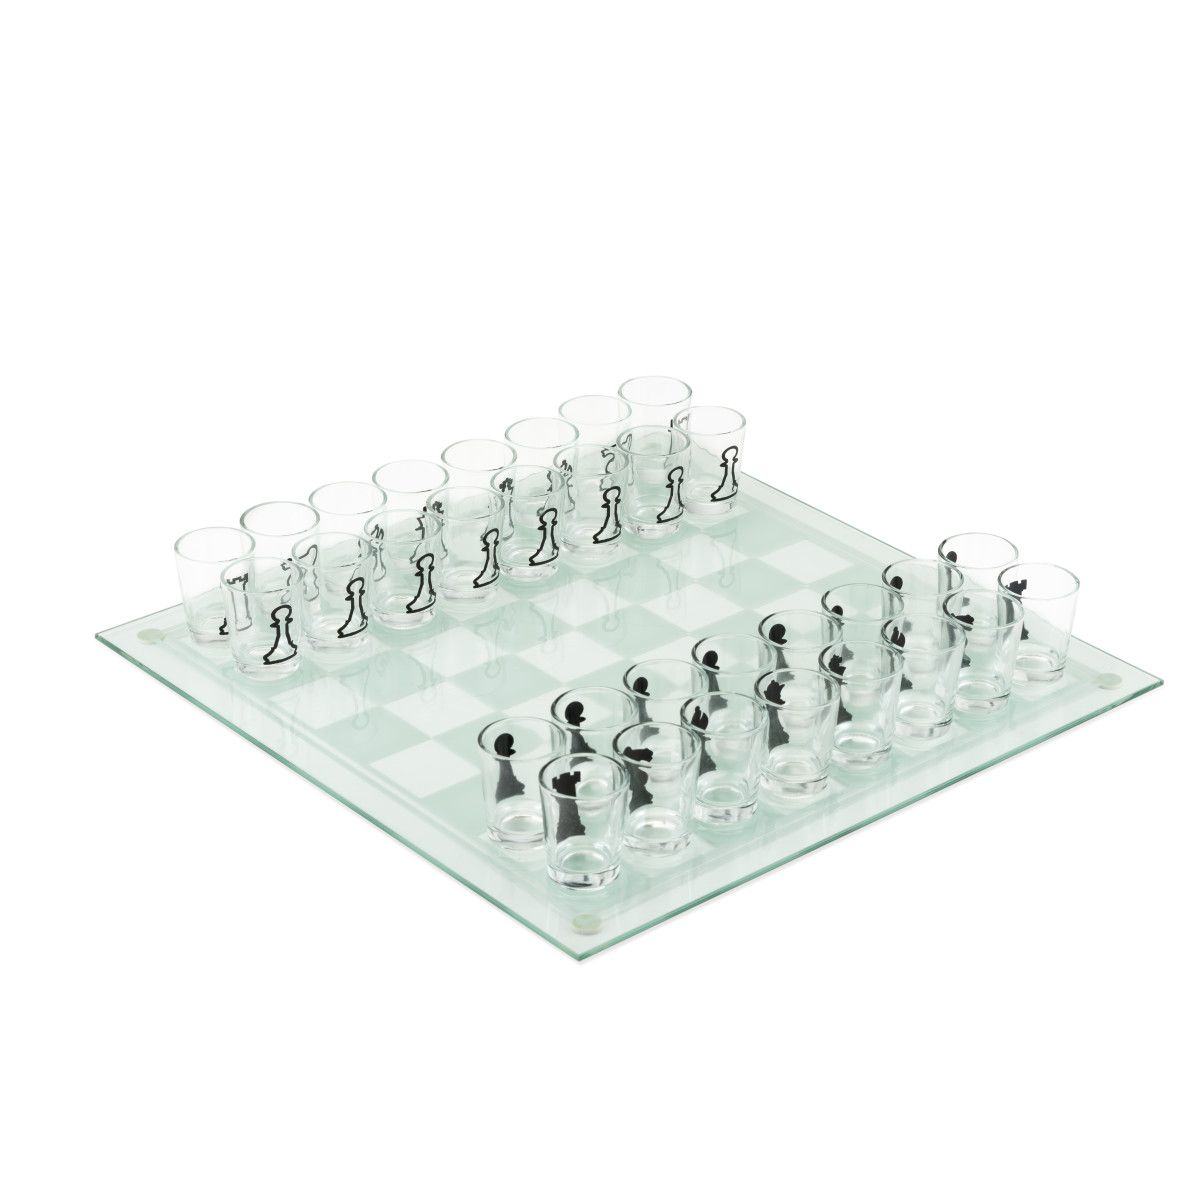 6 Pcs 3d Chess Epoxy Resin Mold Handmade Chess Pieces Mold Uv